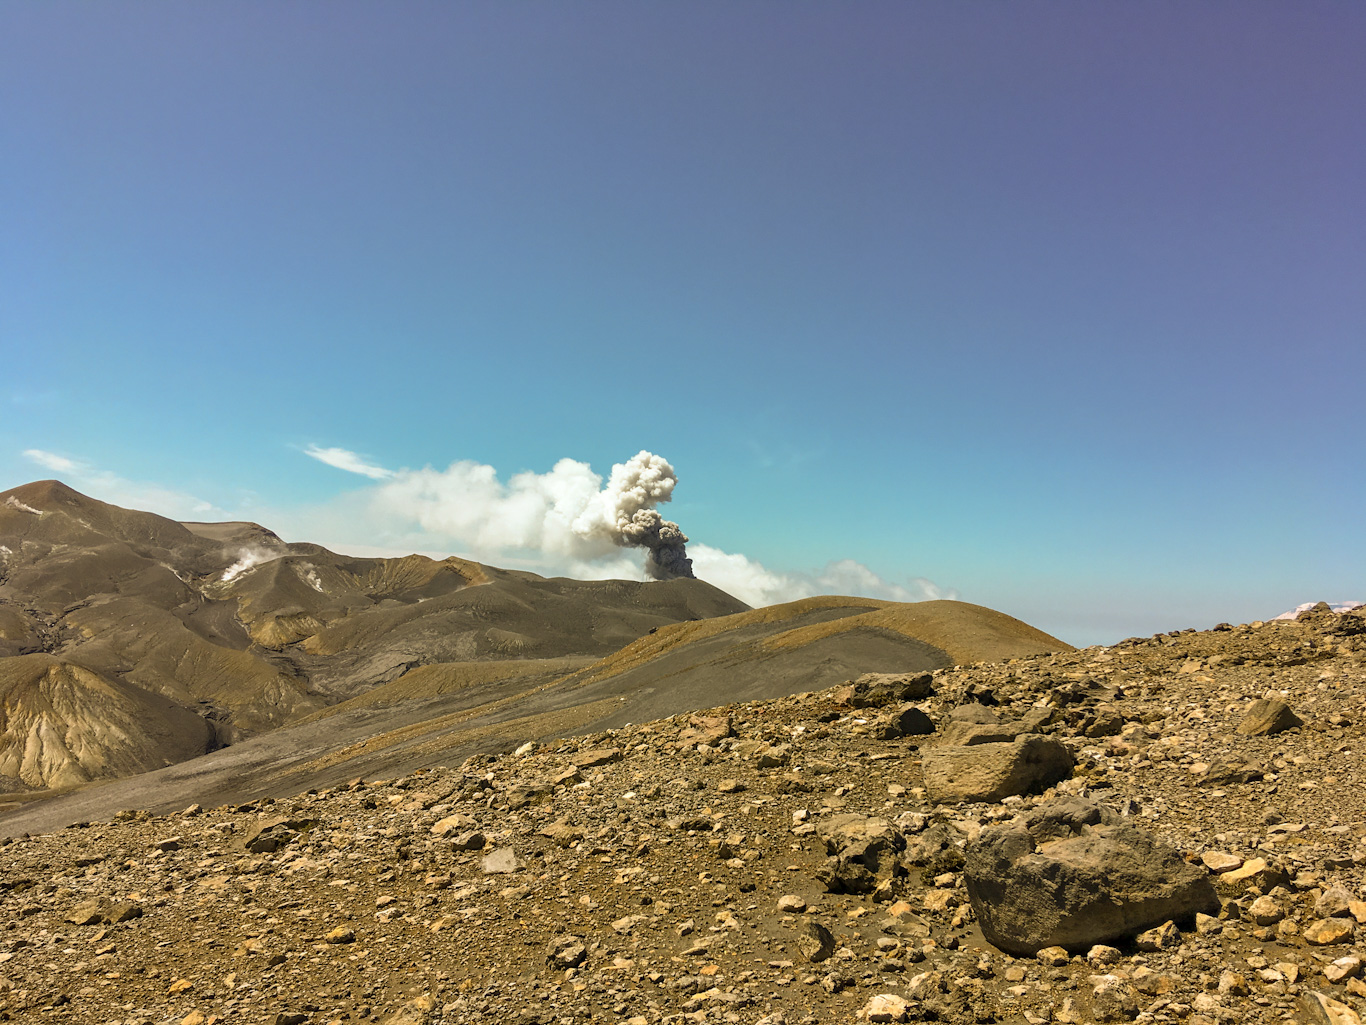 Парамушир, вулкан Эбеко